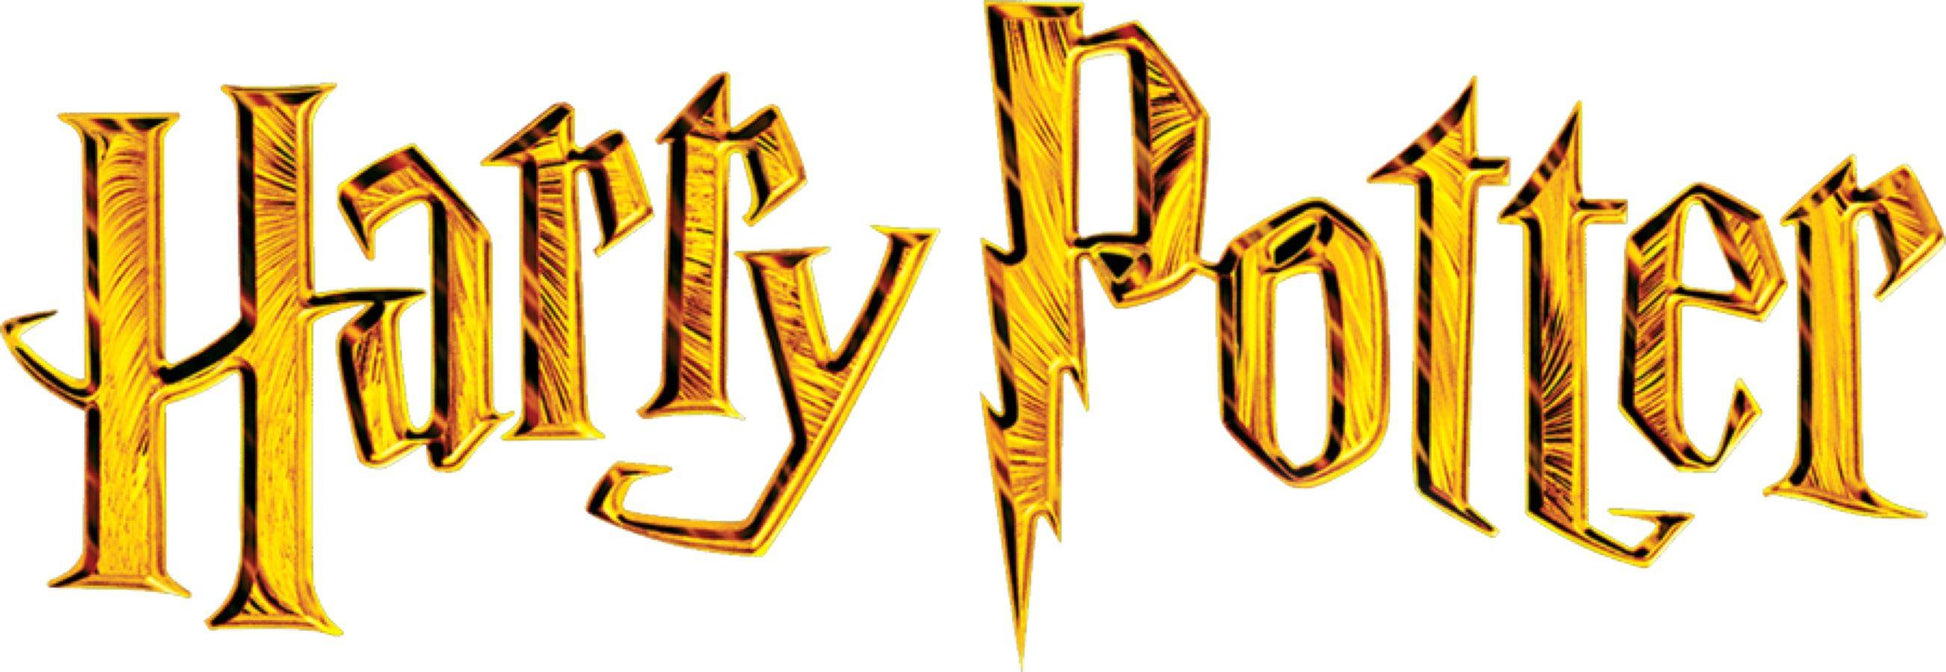 Harry Potter - Honeydukes with Neville Pop! Deluxe